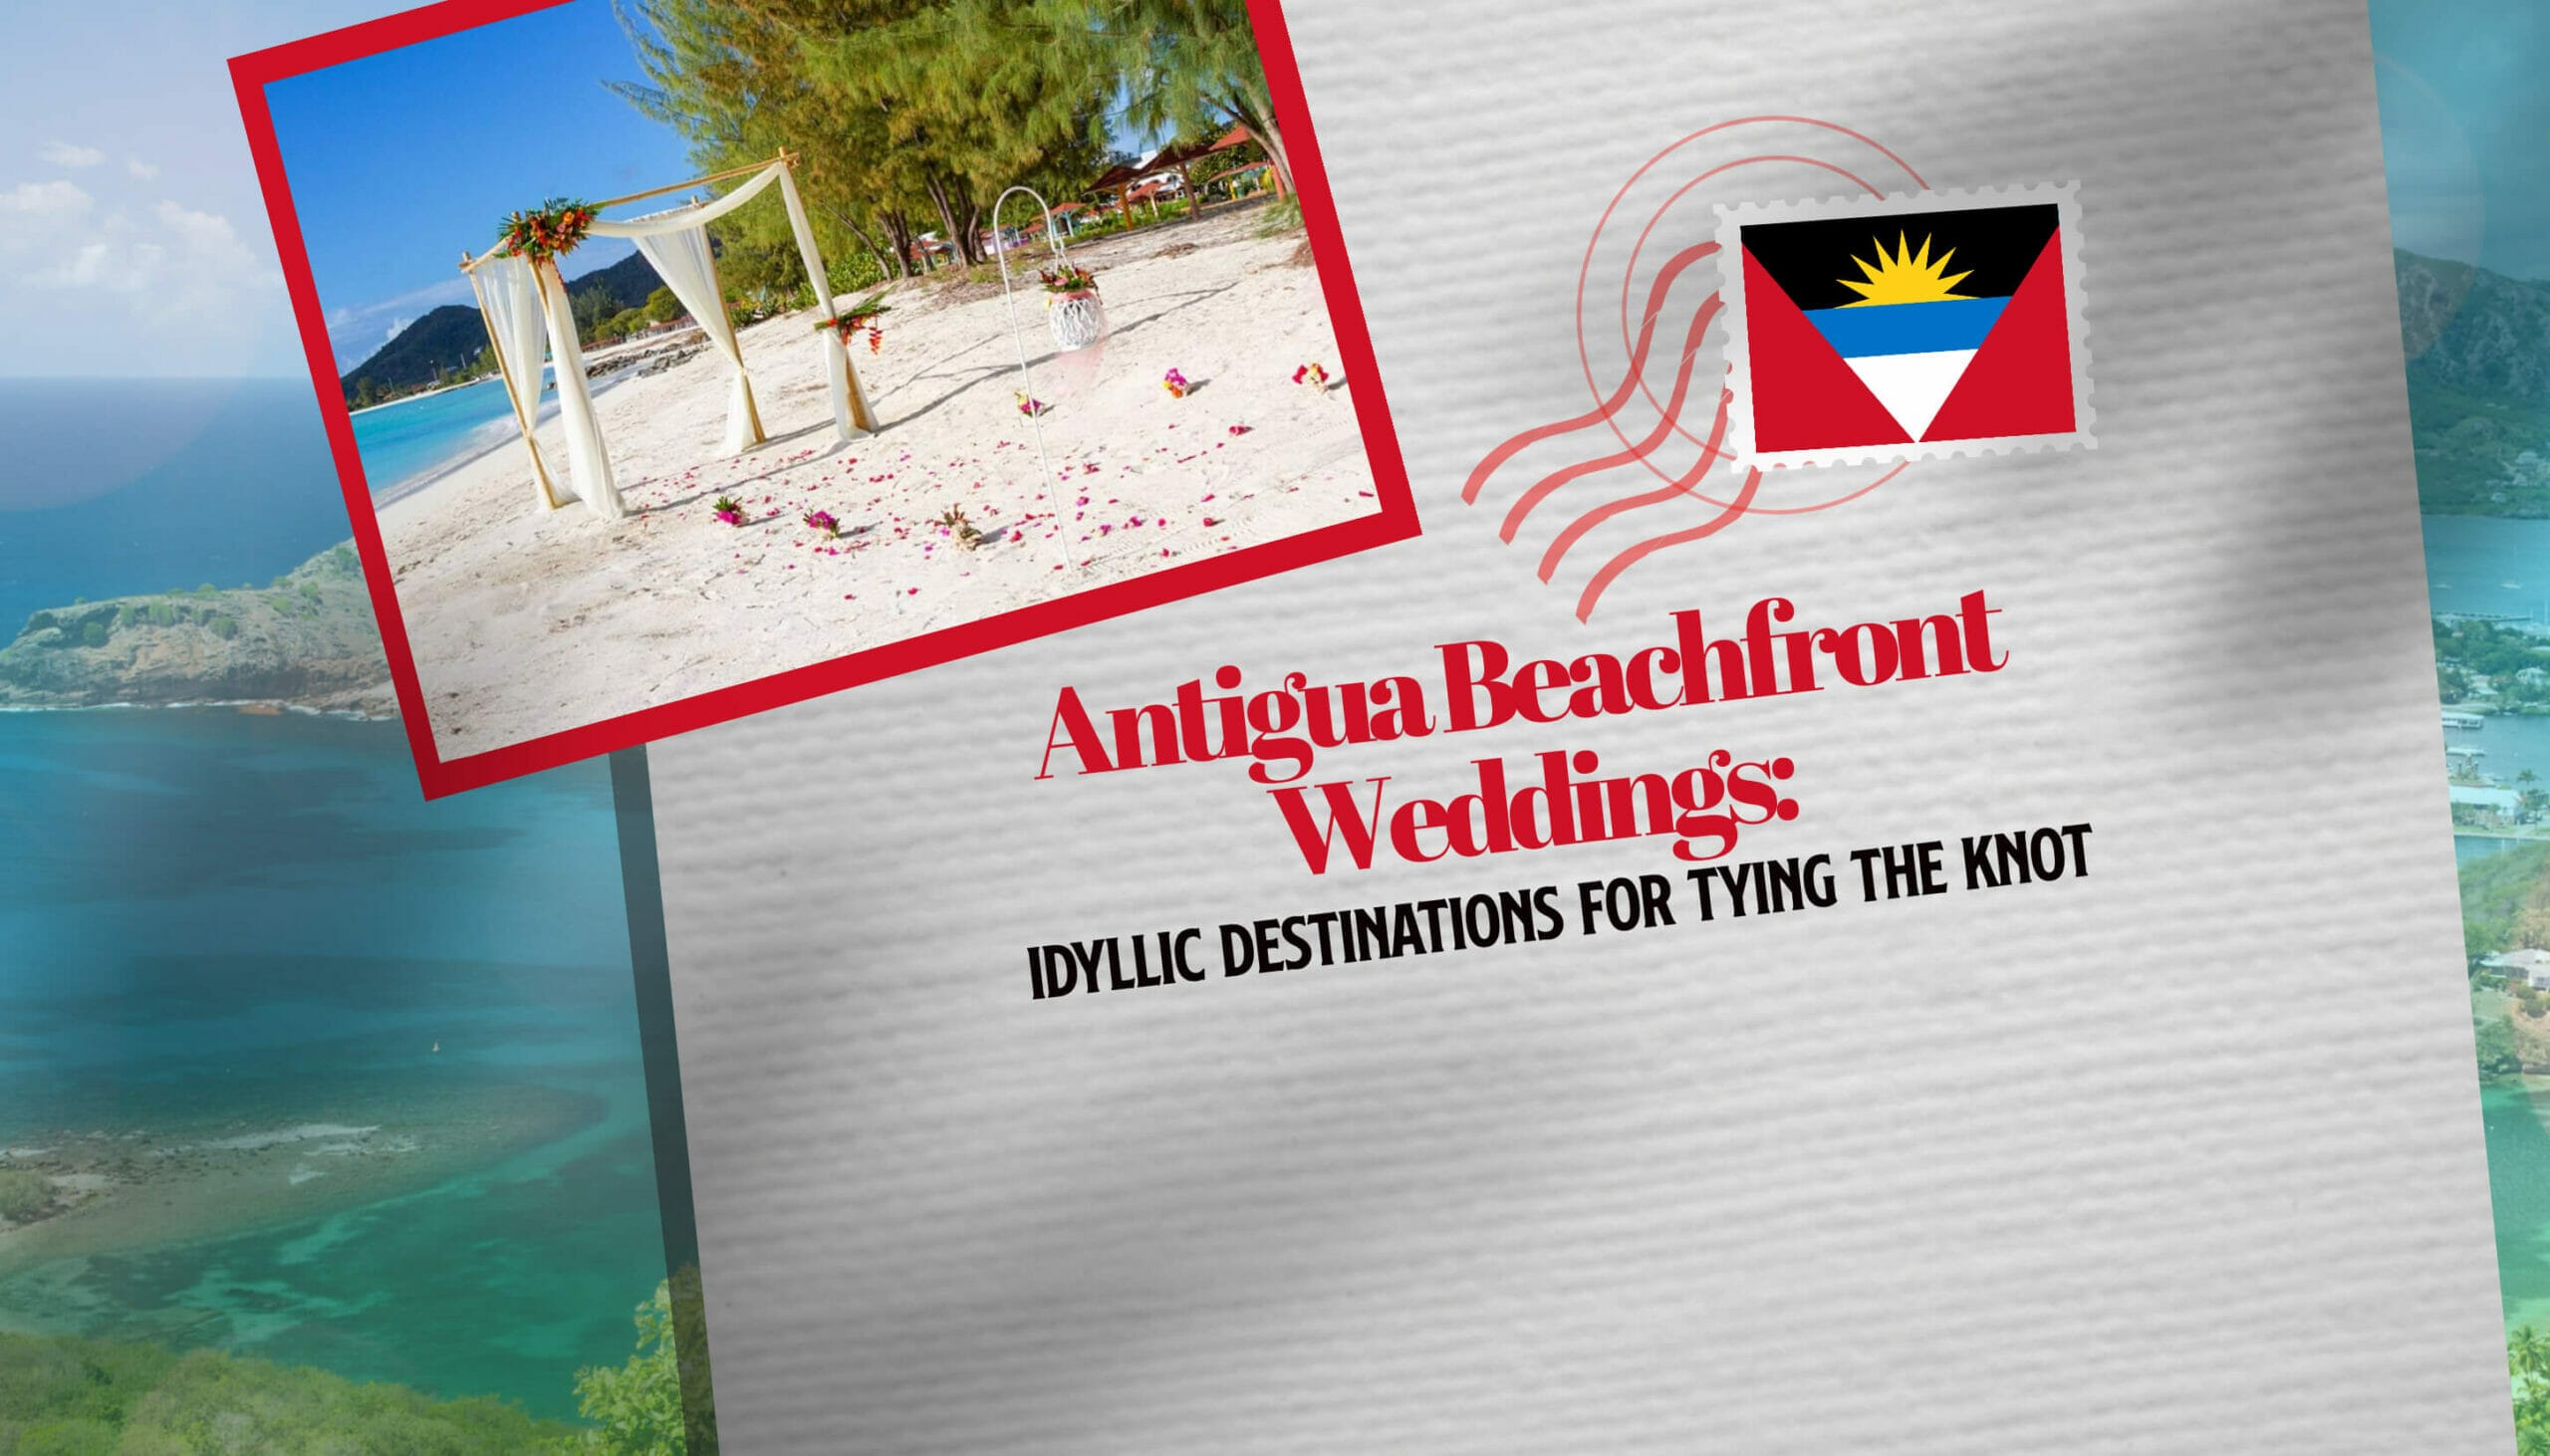 Antigua Beachfront Weddings Idyllic Destinations for Tying the Knot